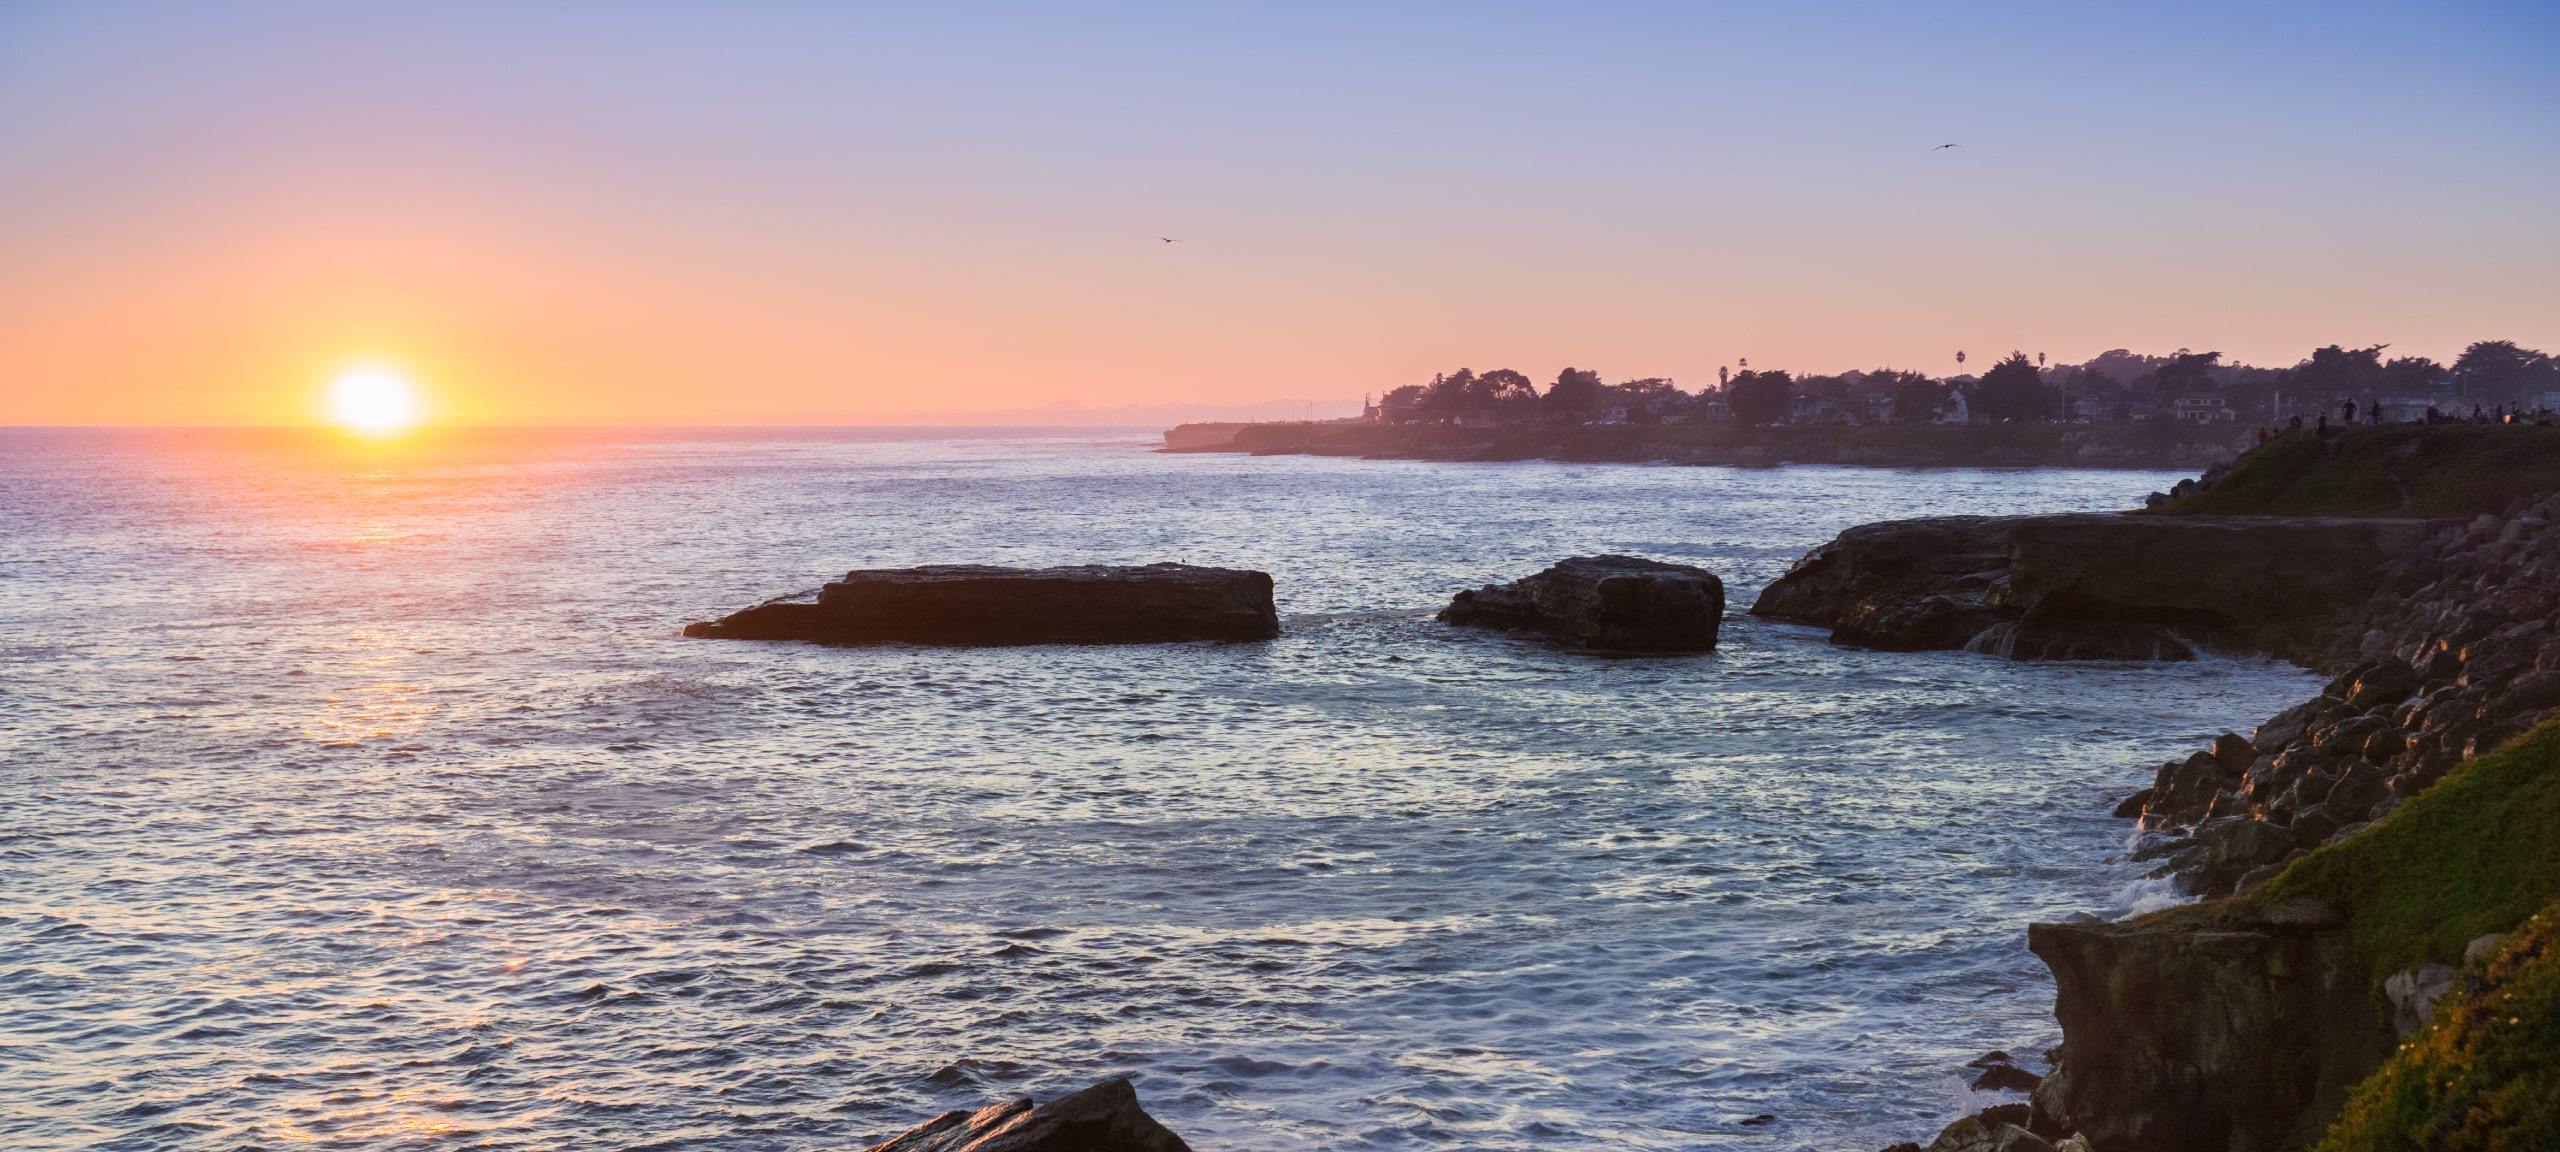 Sunset at Santa Cruz coast with rocks